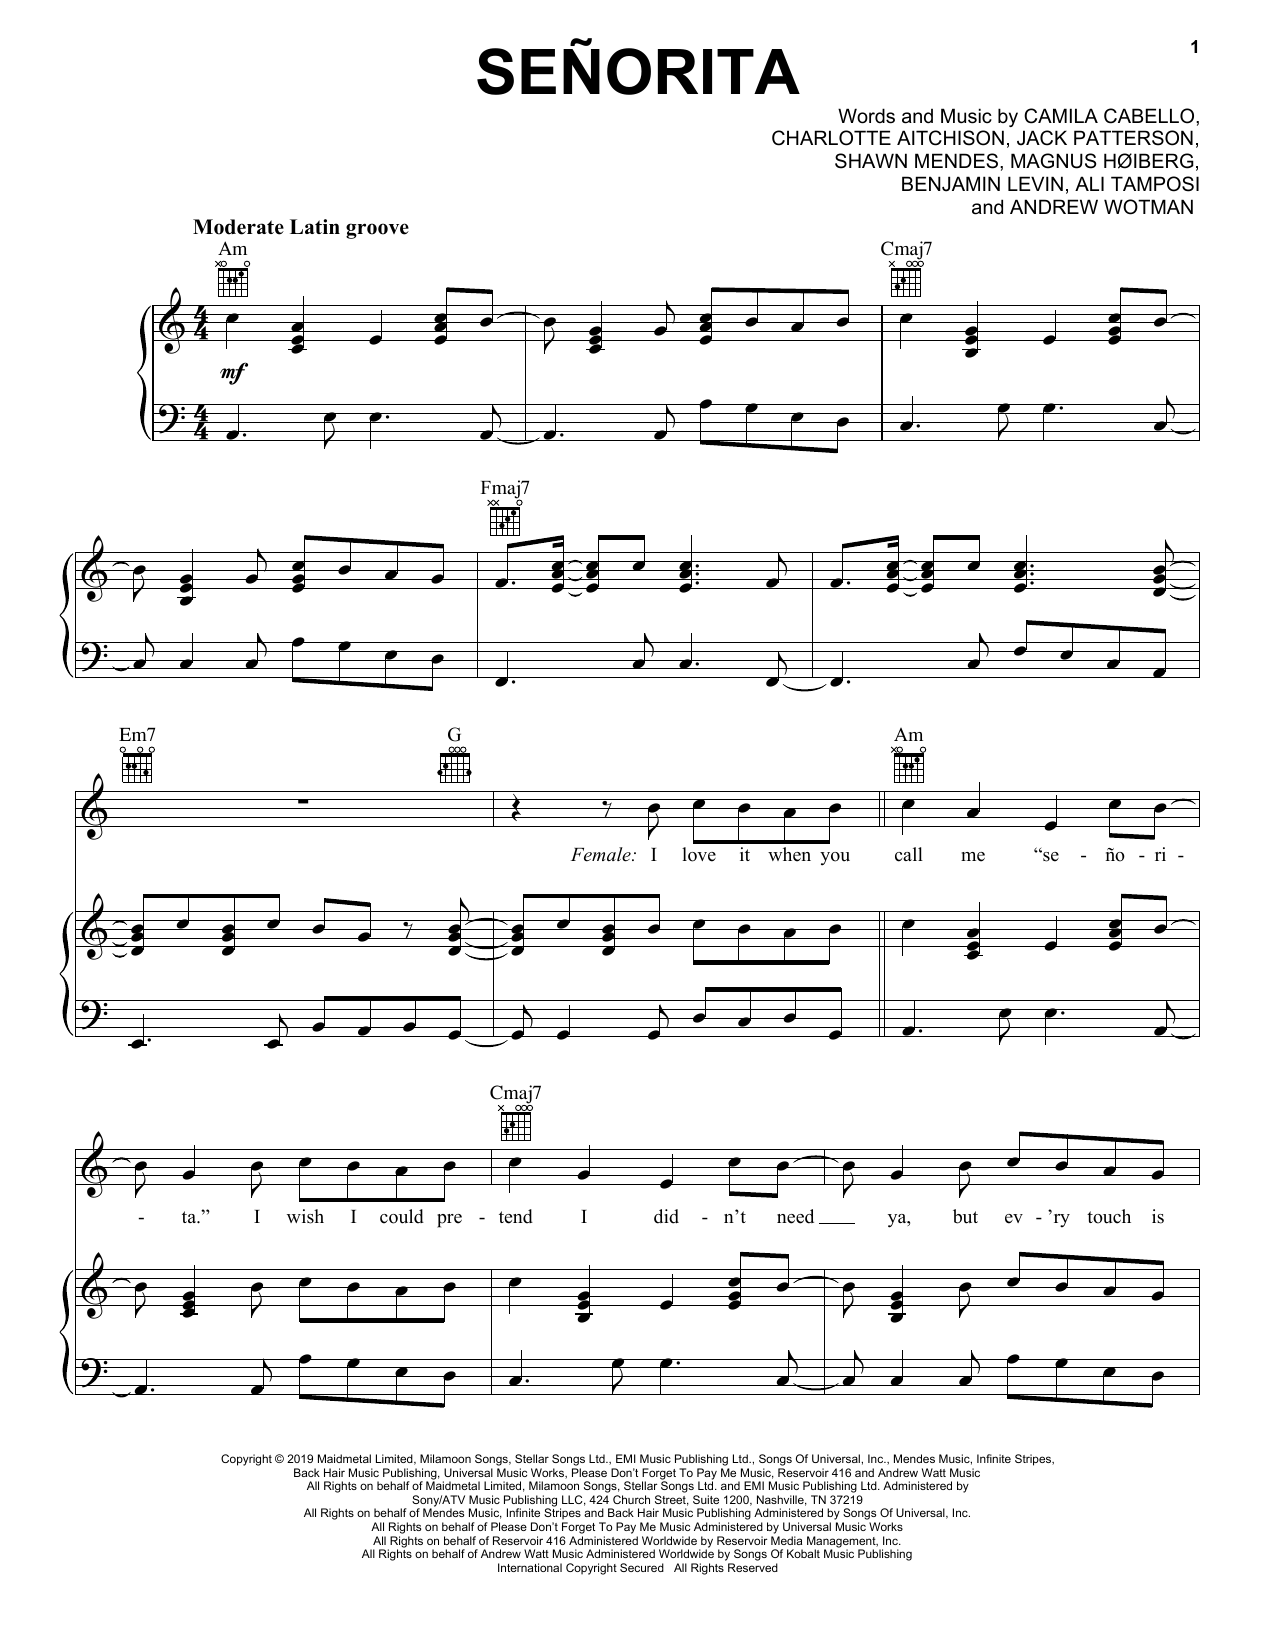 Shawn Mendes & Camila Cabello Señorita Sheet Music Notes & Chords for Cello Duet - Download or Print PDF